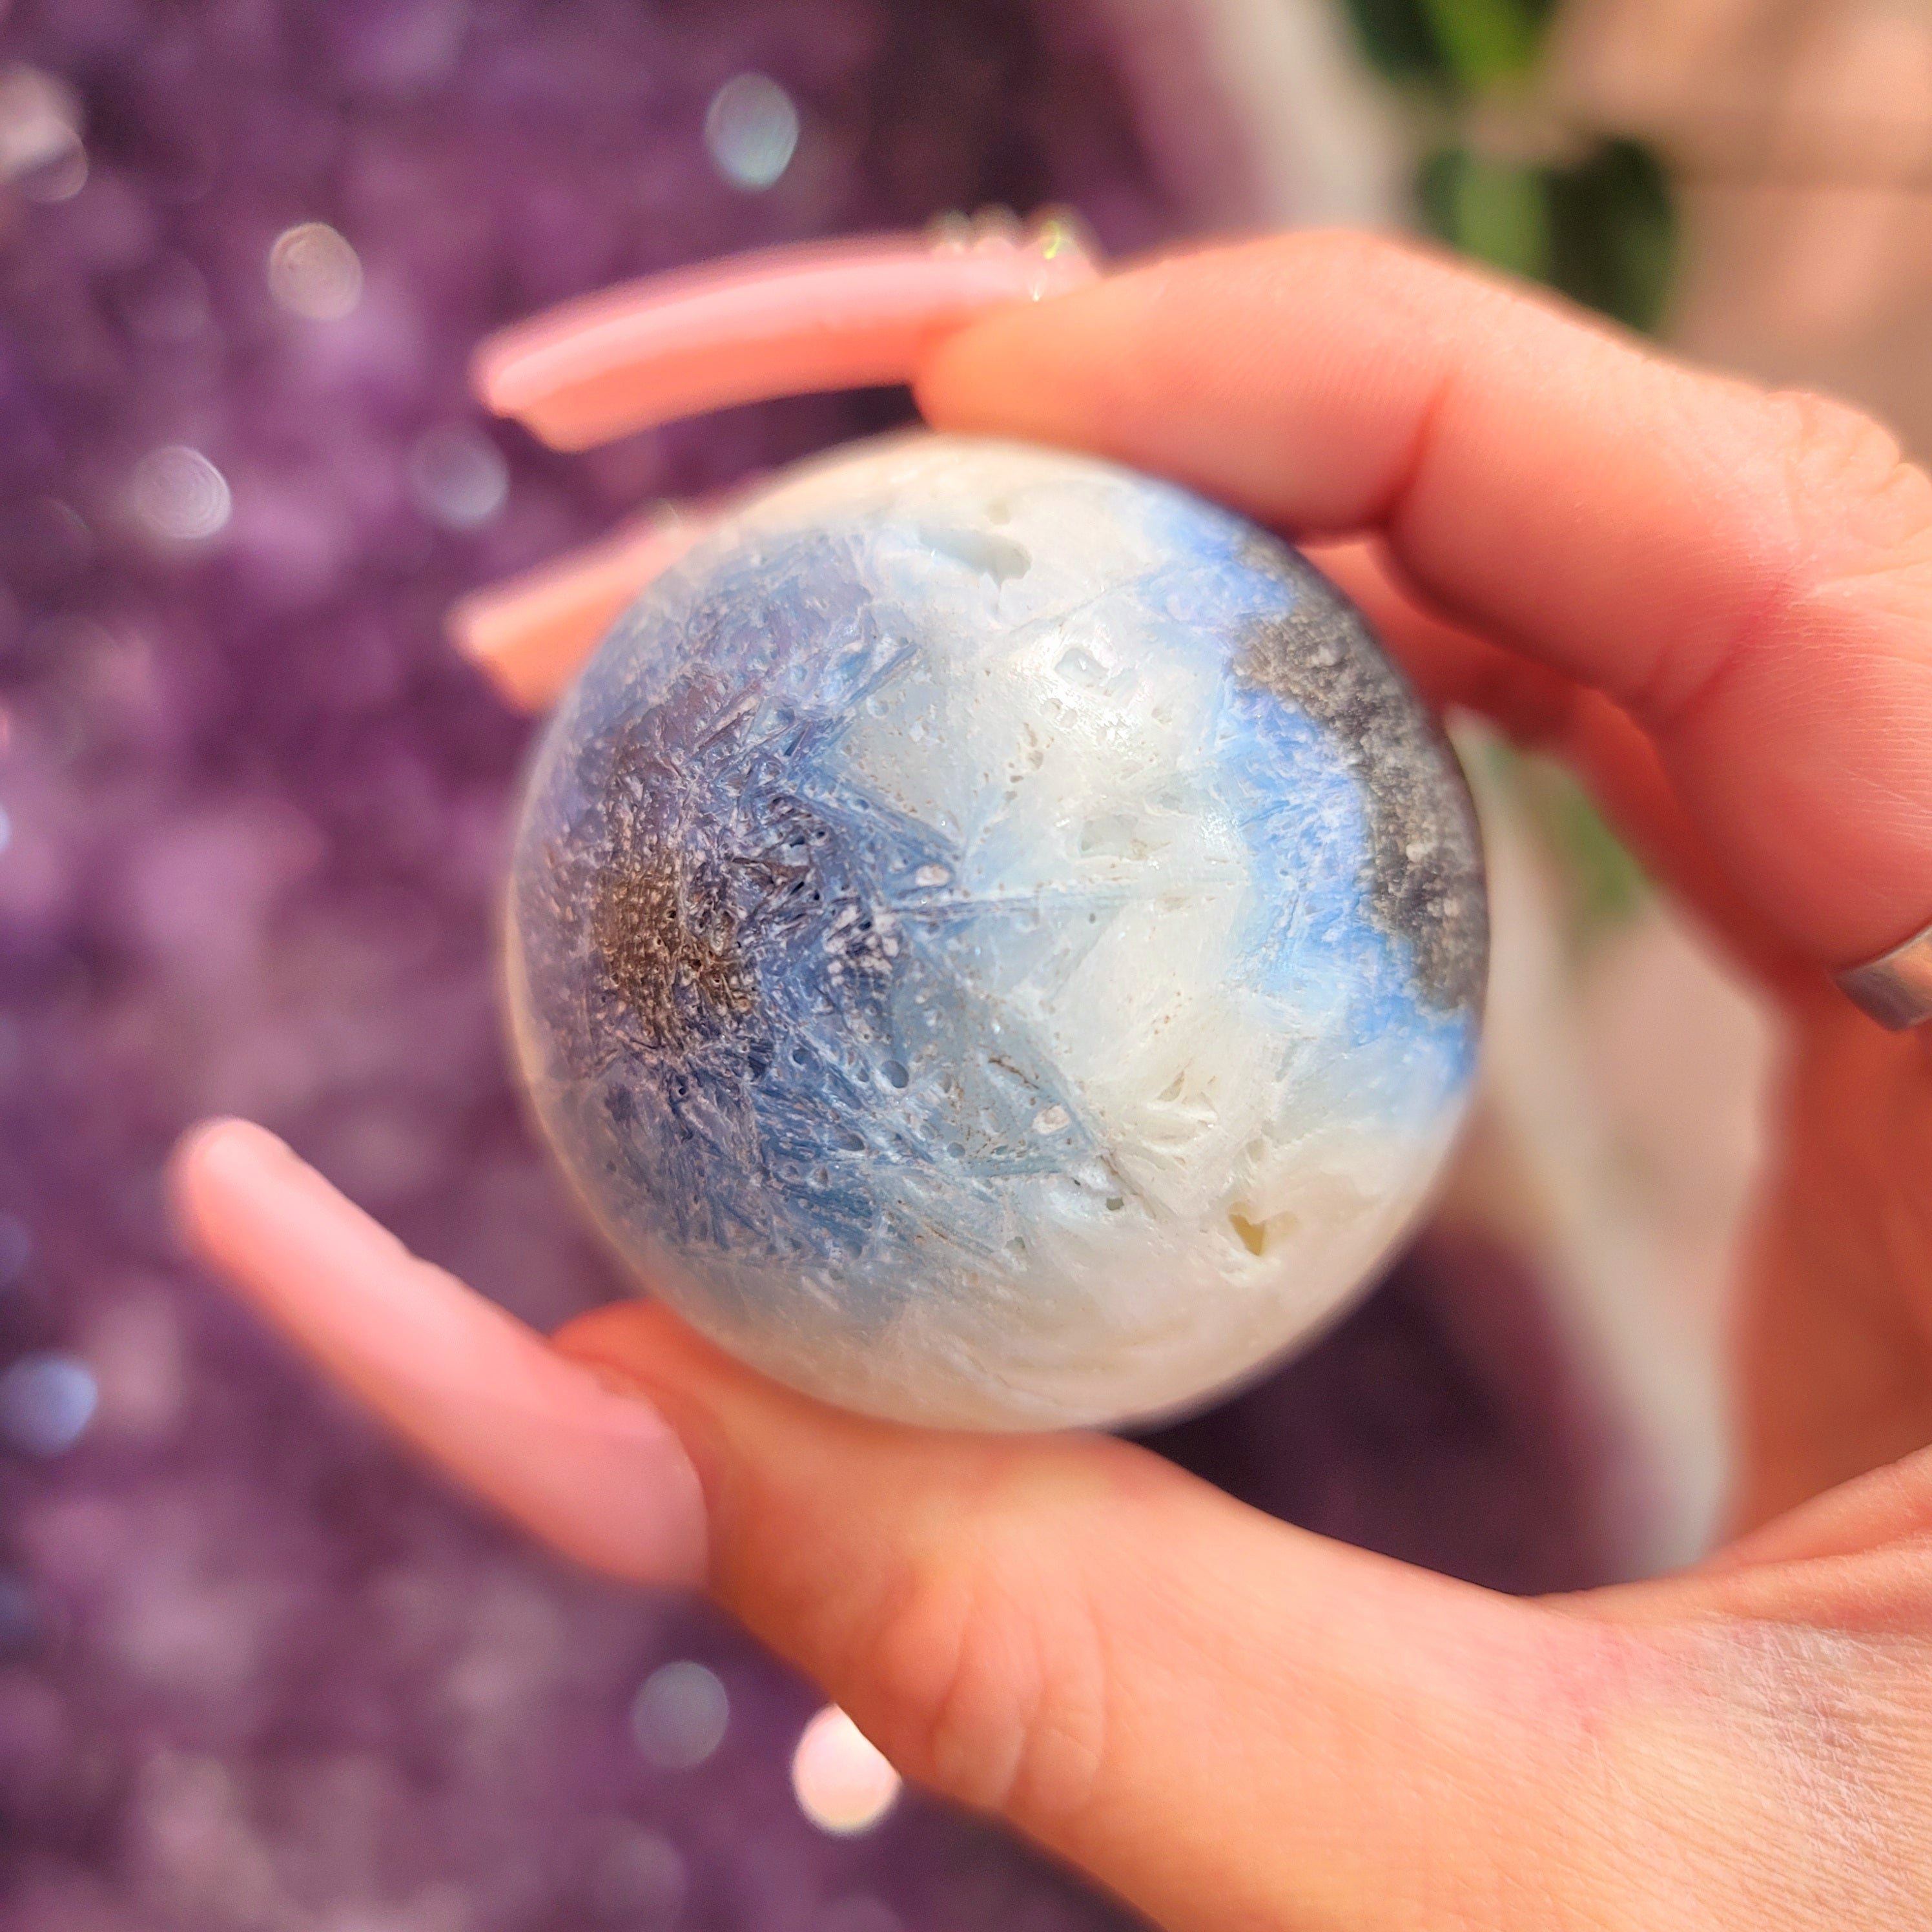 Blue Ice Sphere for Finding Light in the Dark